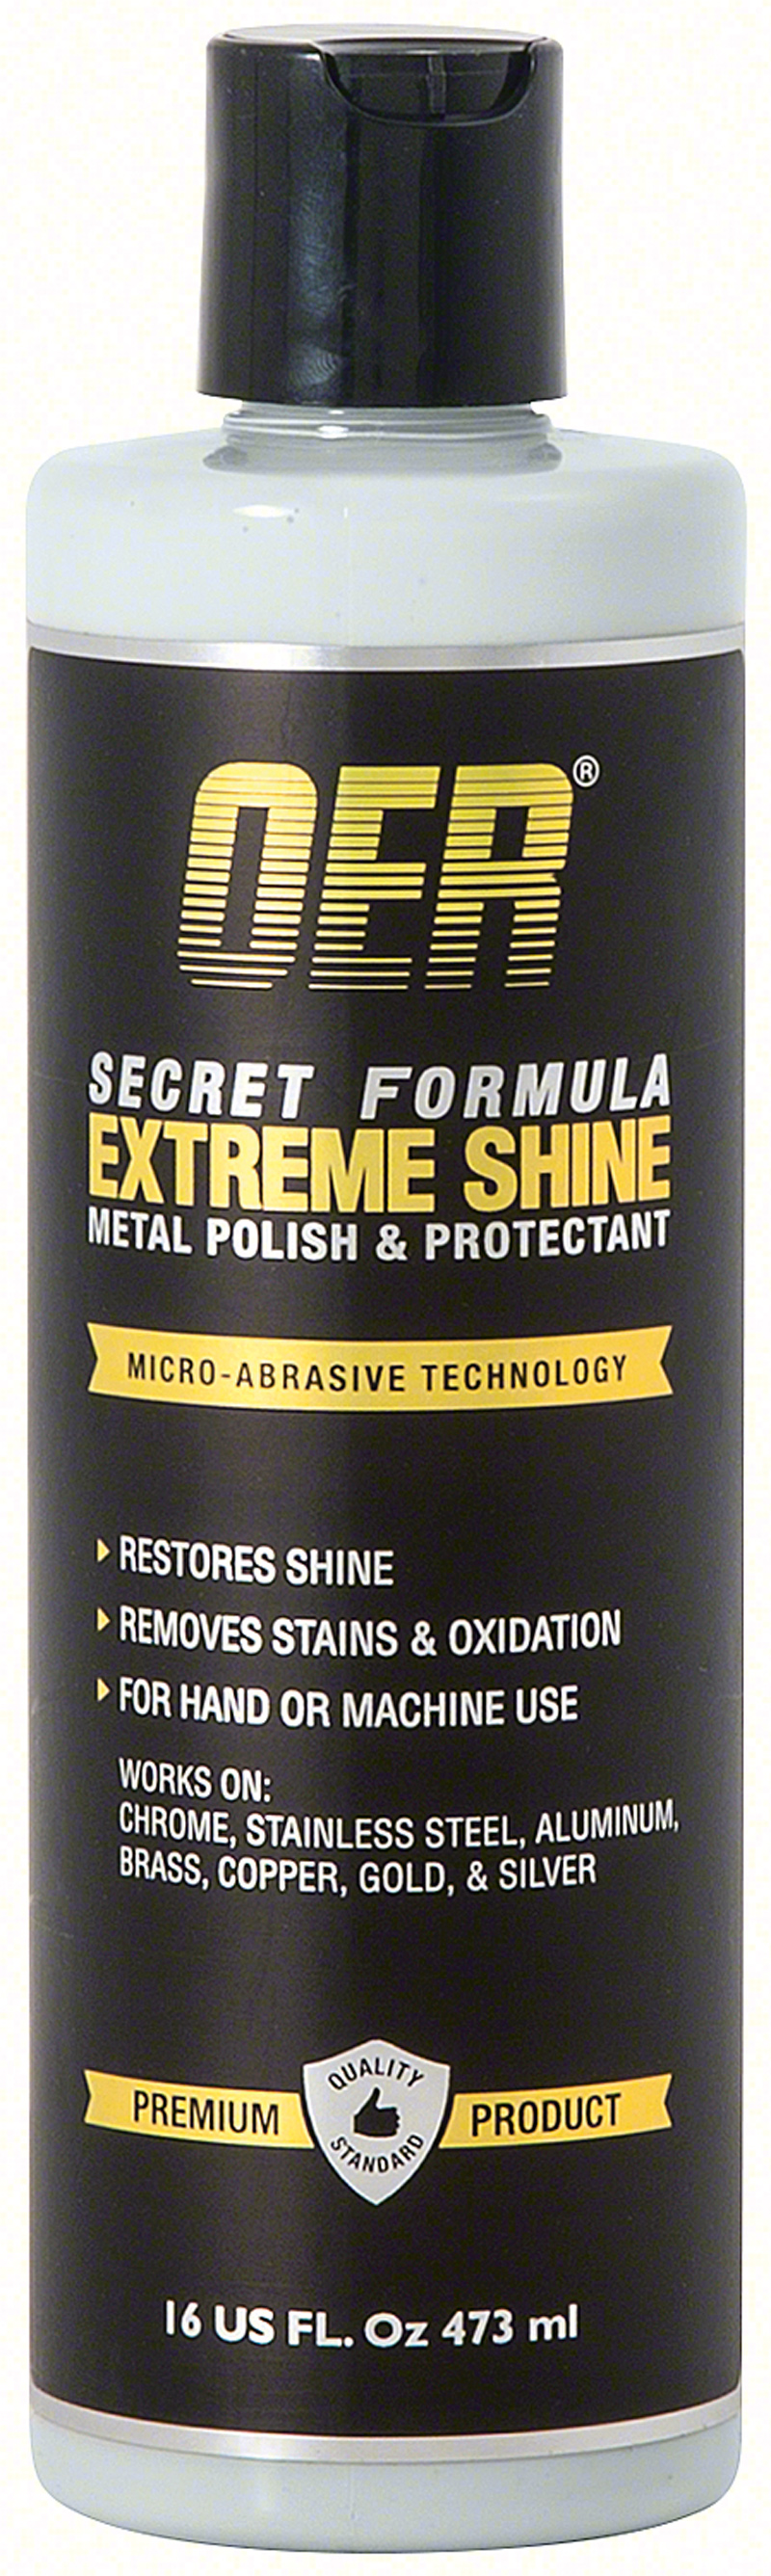 Secret Formula 16 Oz Extreme Shine Metal Polish and Sealant 